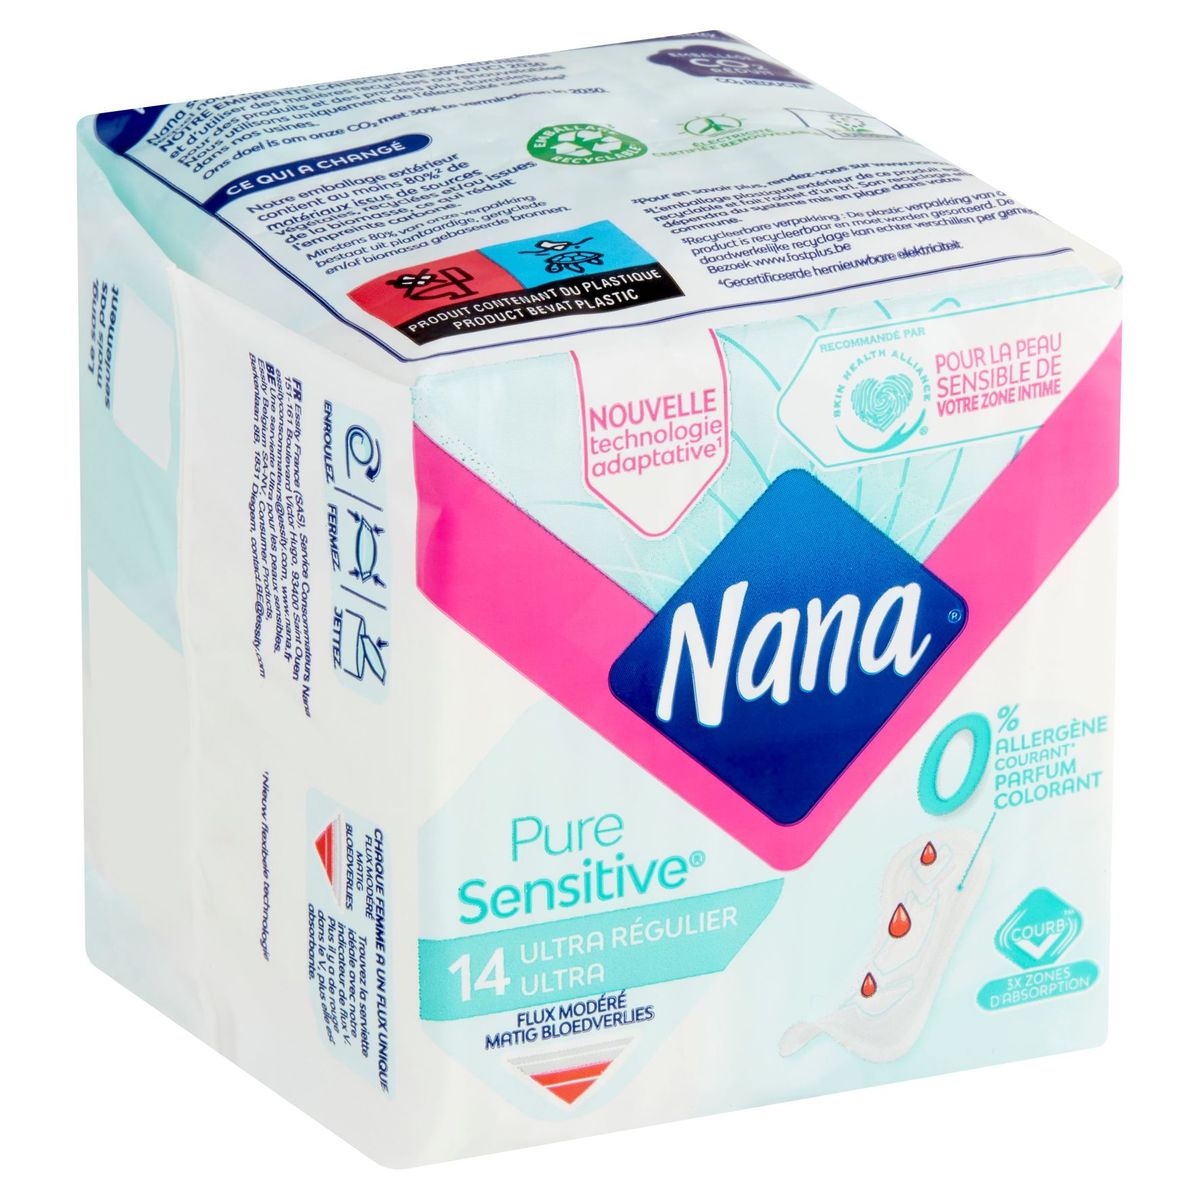 Nana Pure Sensitive Ultra Regulier/Normal Matig Bloedverlies14 St.